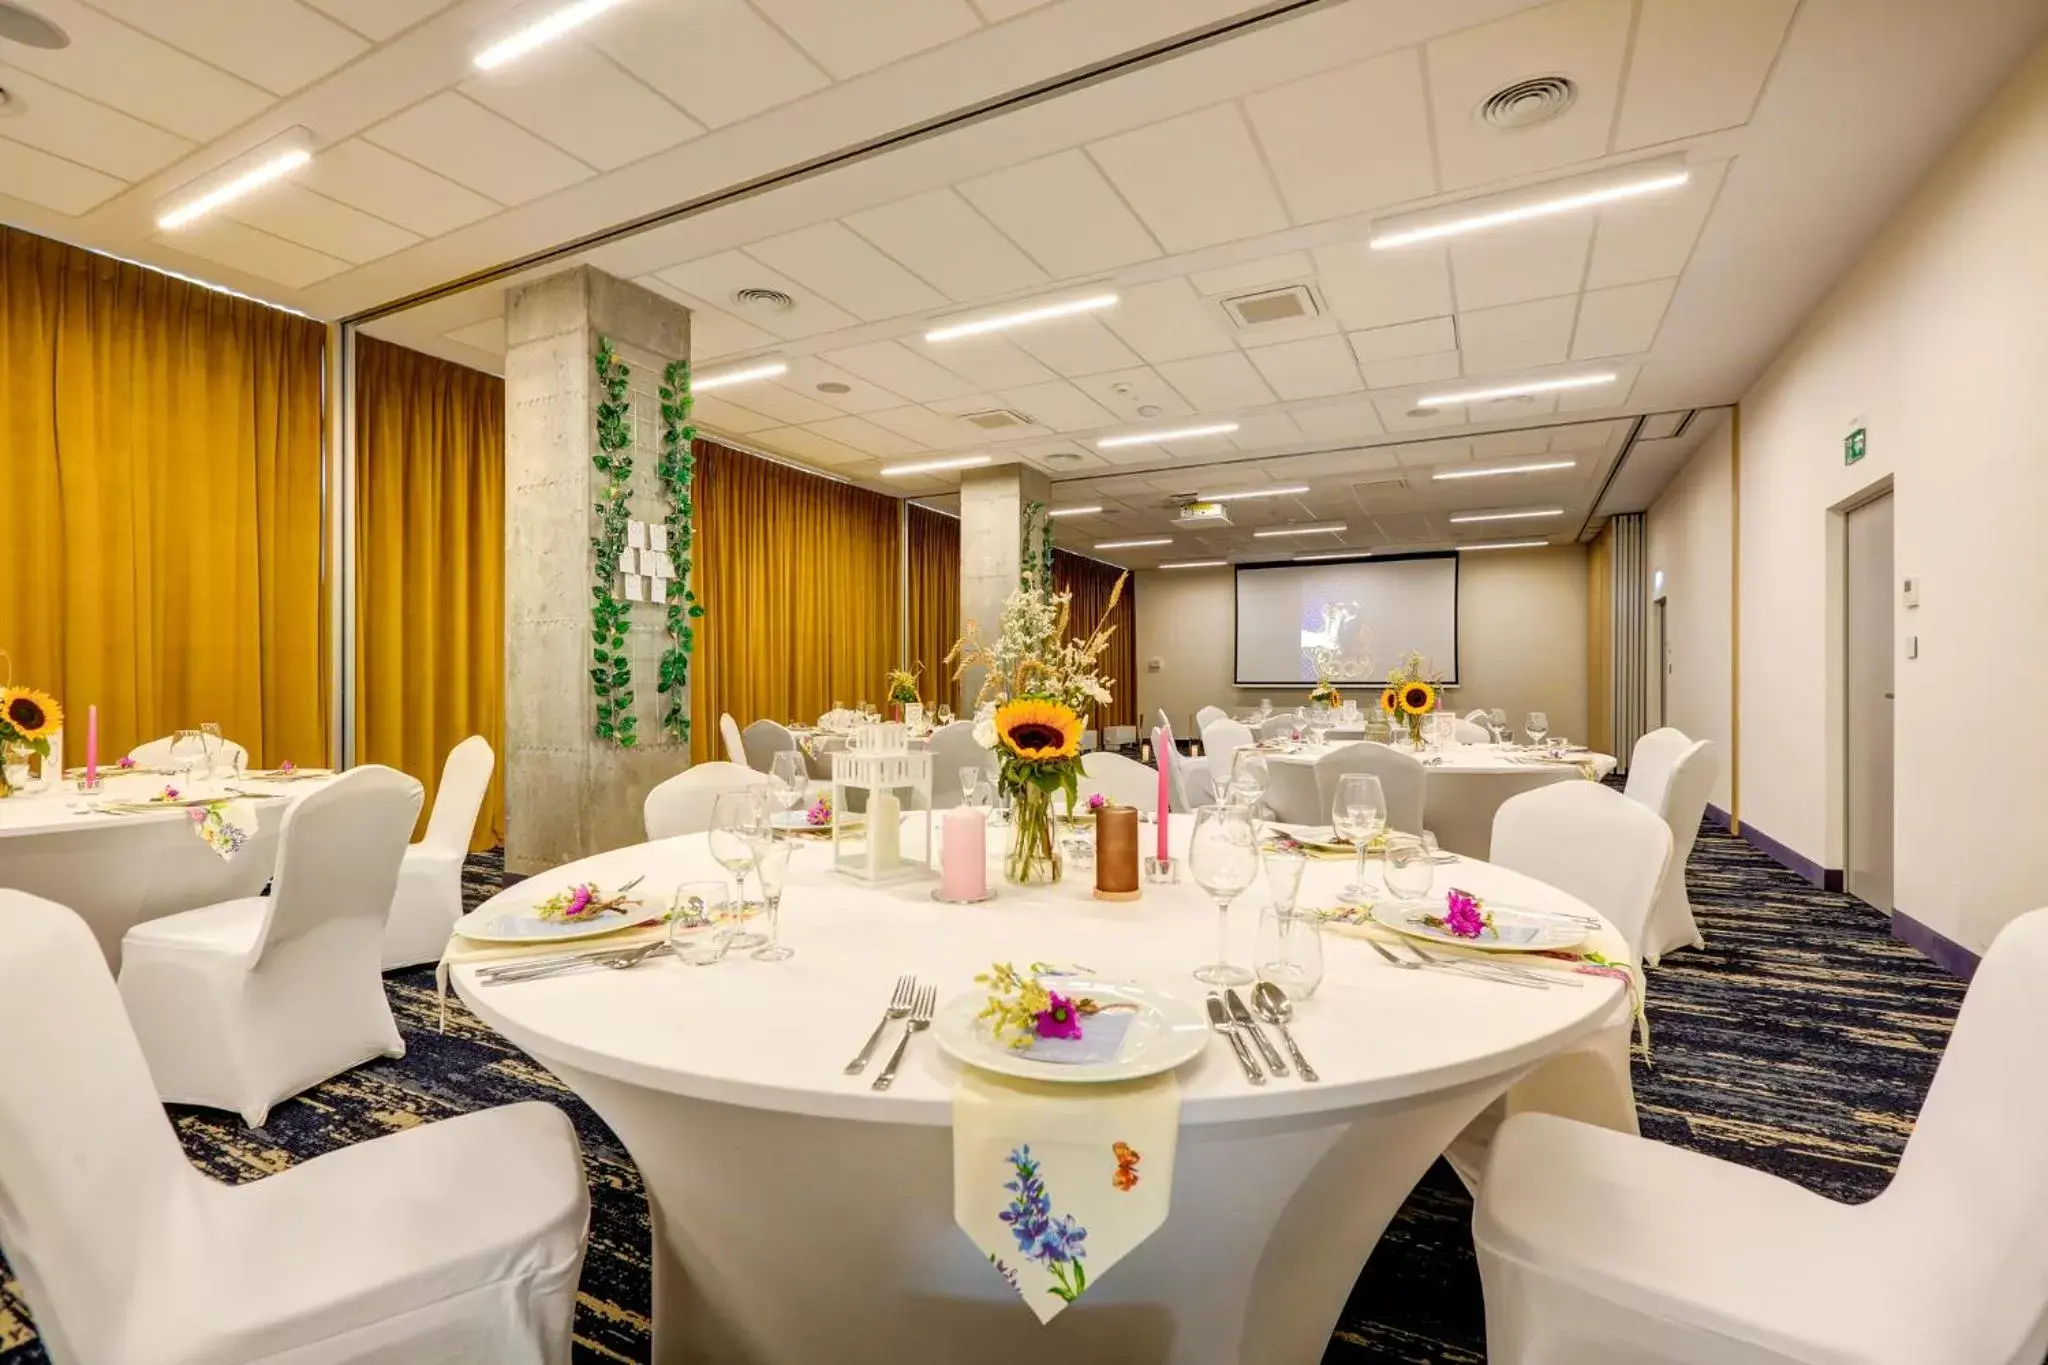 Banquet/Function facilities, Banquet Facilities in Hotel Arche Geologiczna